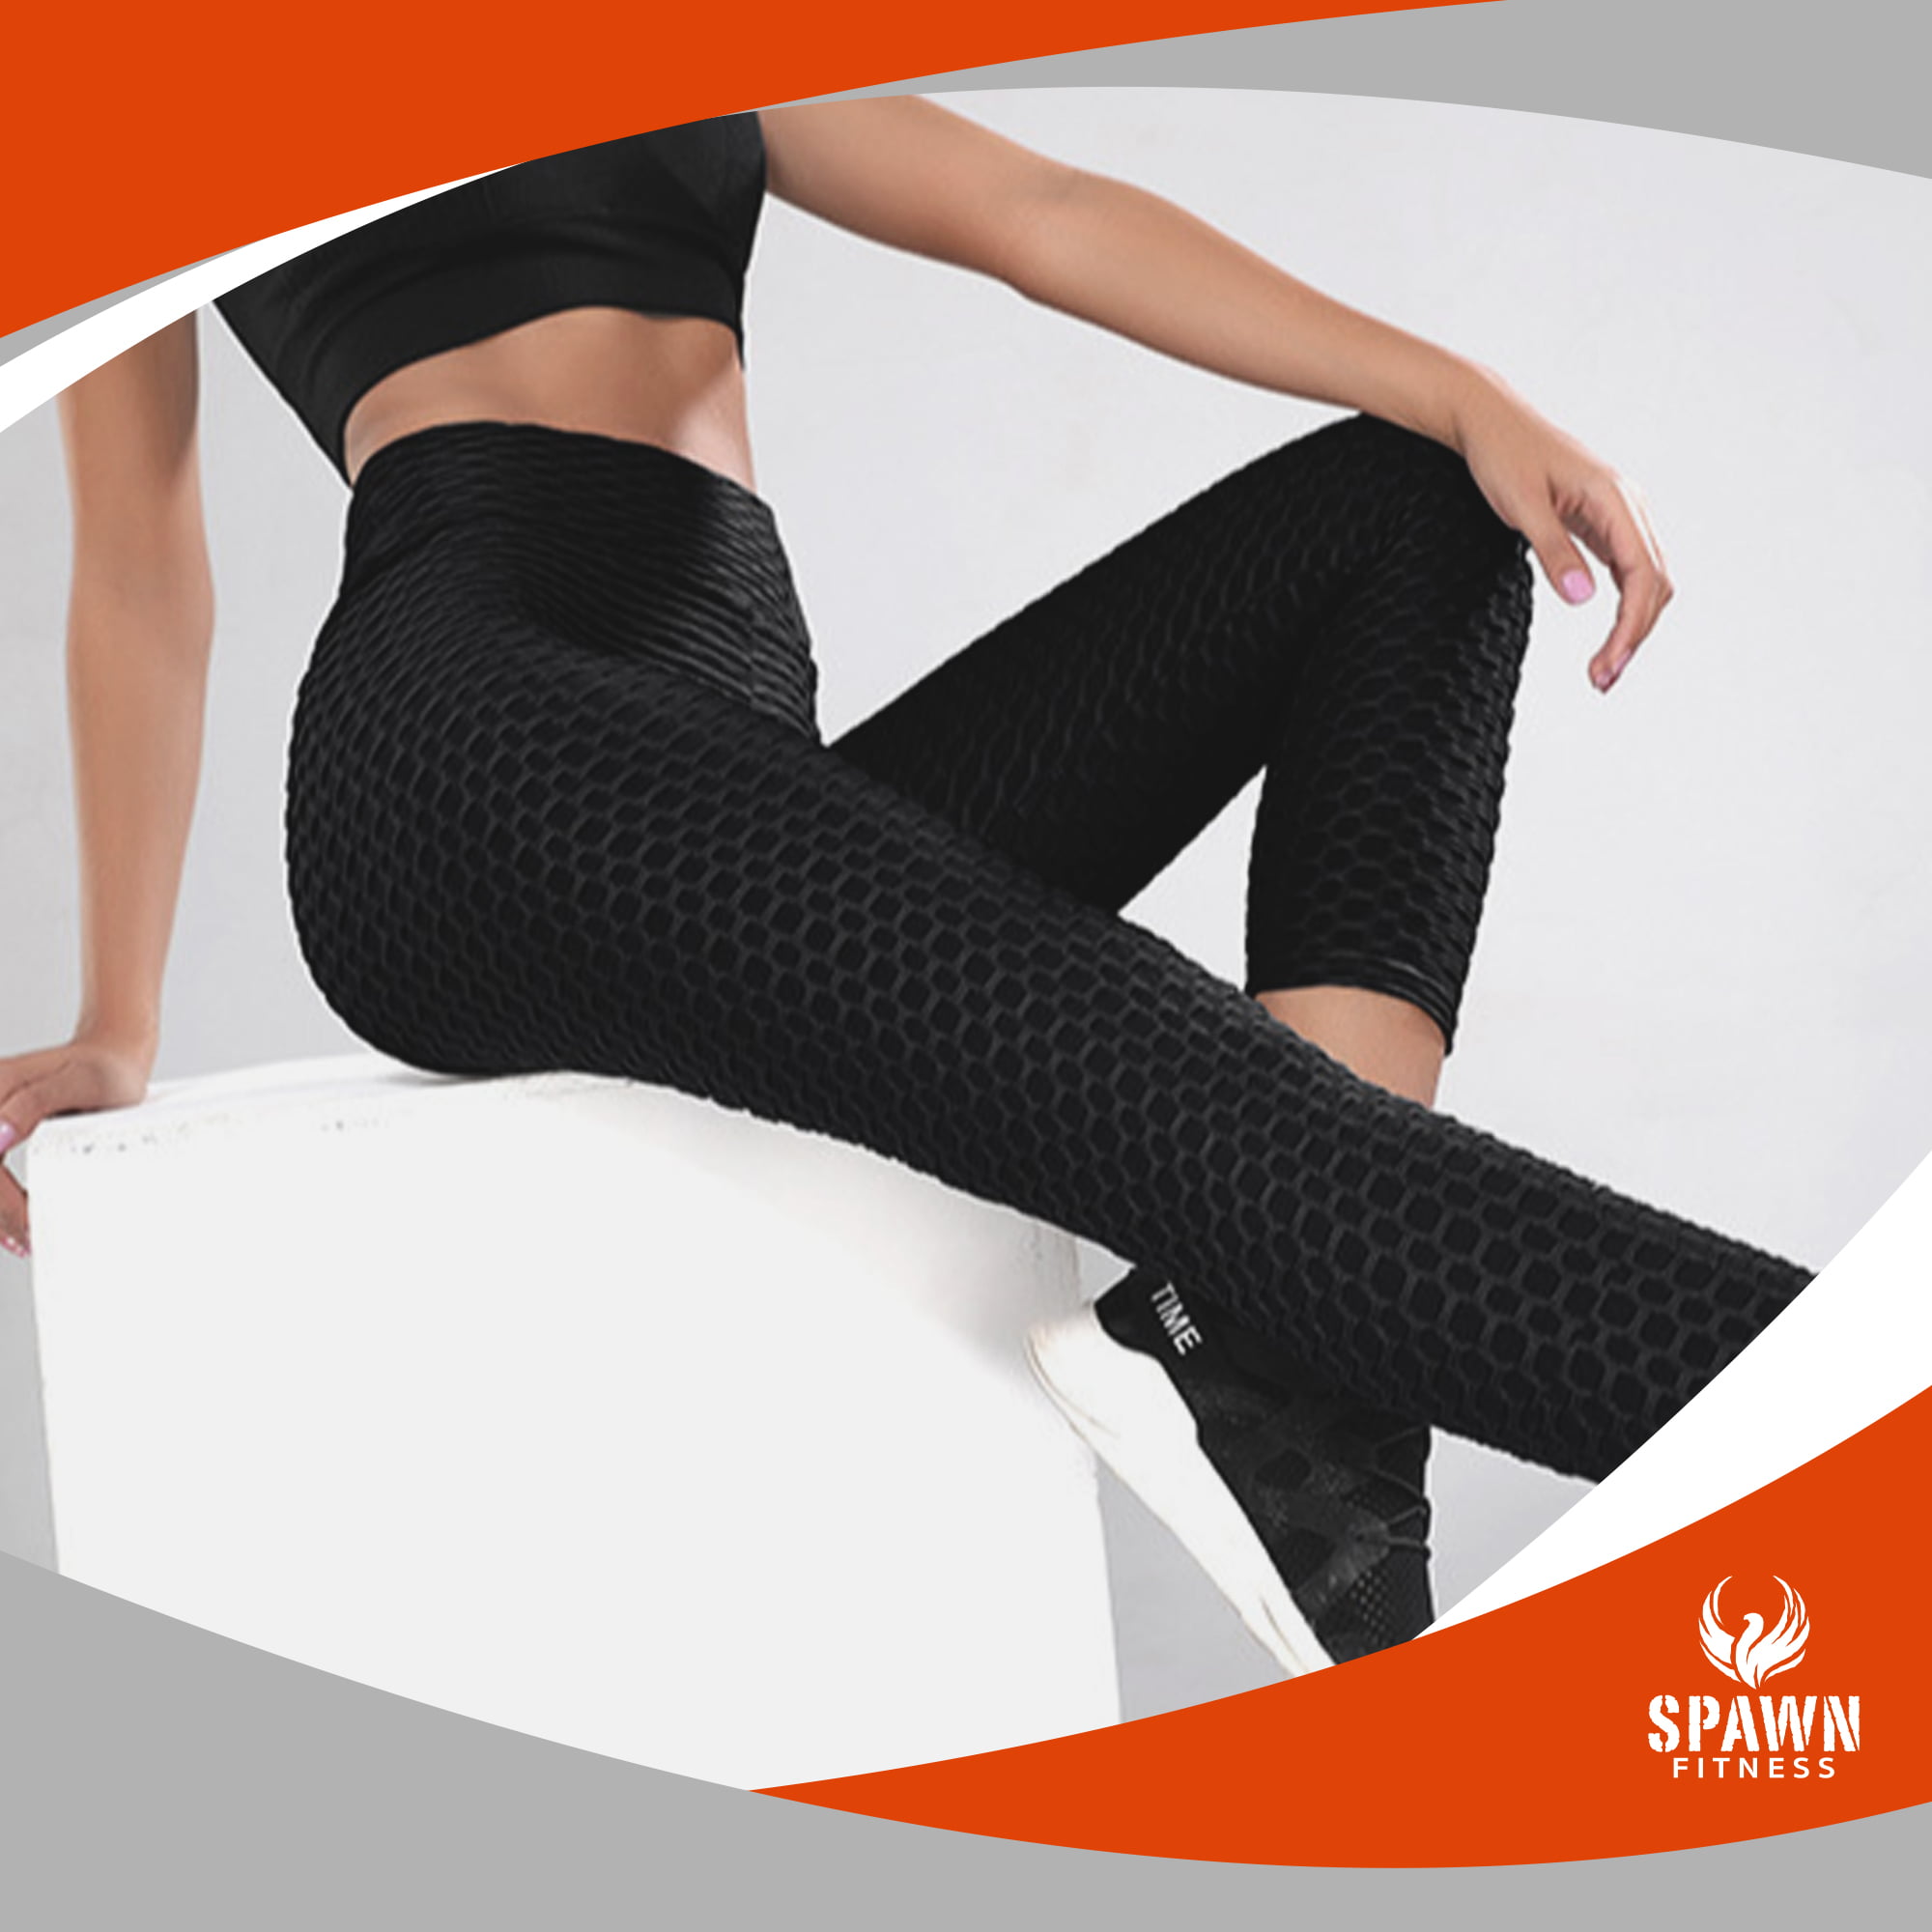 OfferMax TIK TOK Leggings Shorts Butt Lift Tiktok Scrunch Leggings Workout Shorts  Legging Yoga Stretch Pants Butt LiftHigh Waist Seamless Leggings (Black, L)  price in UAE,  UAE